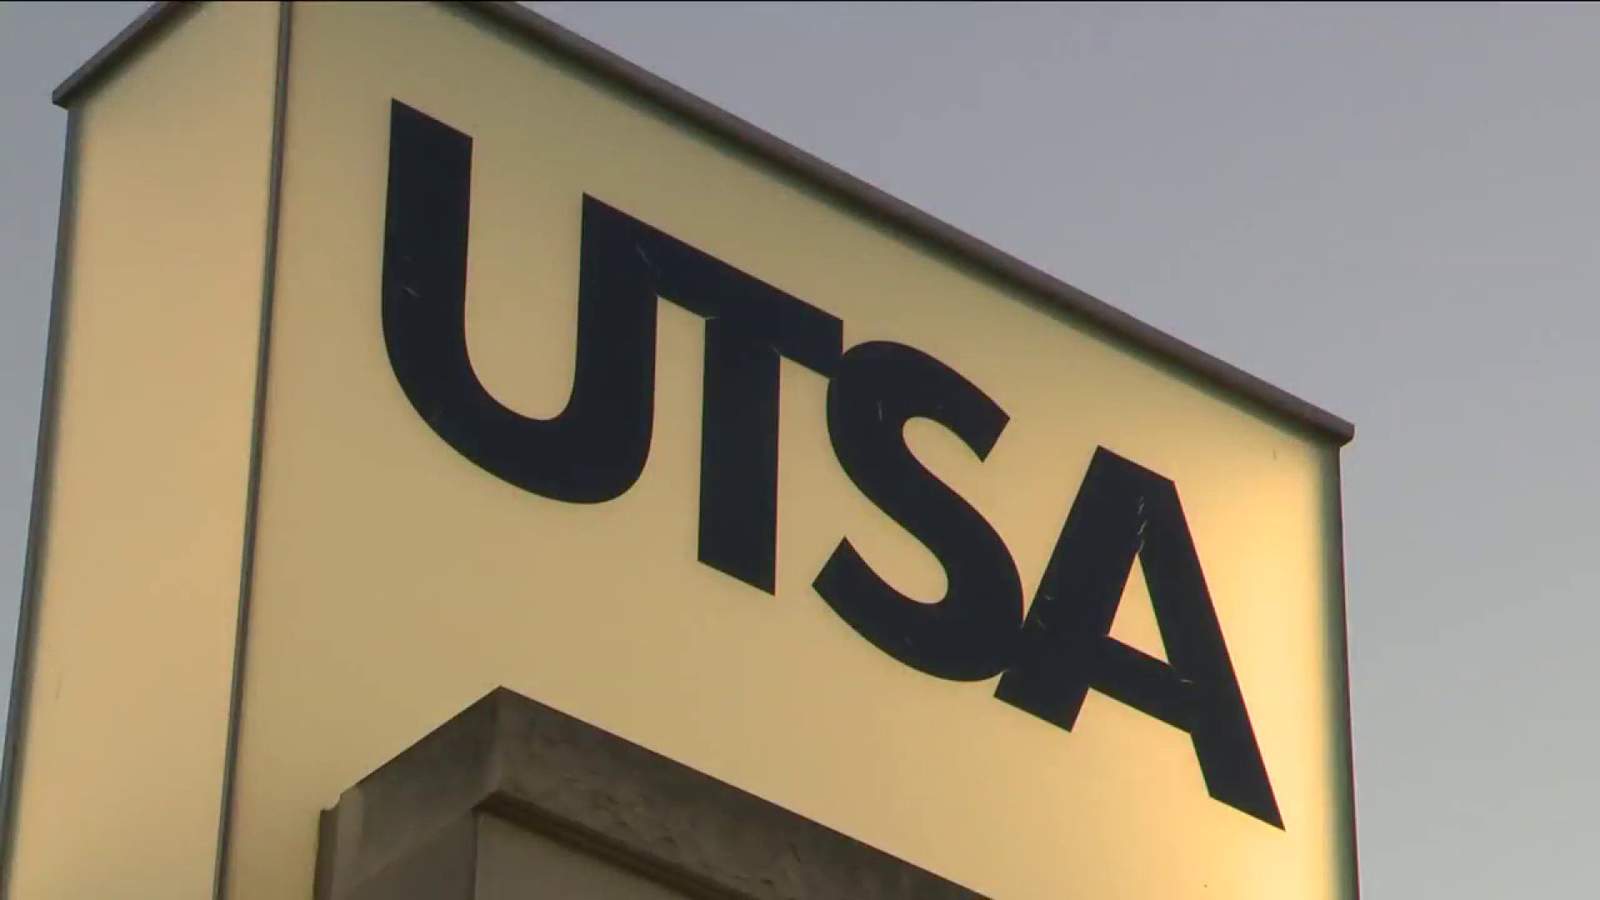 UTSA expecting more than $35M revenue shortfall; to cut hundreds of jobs